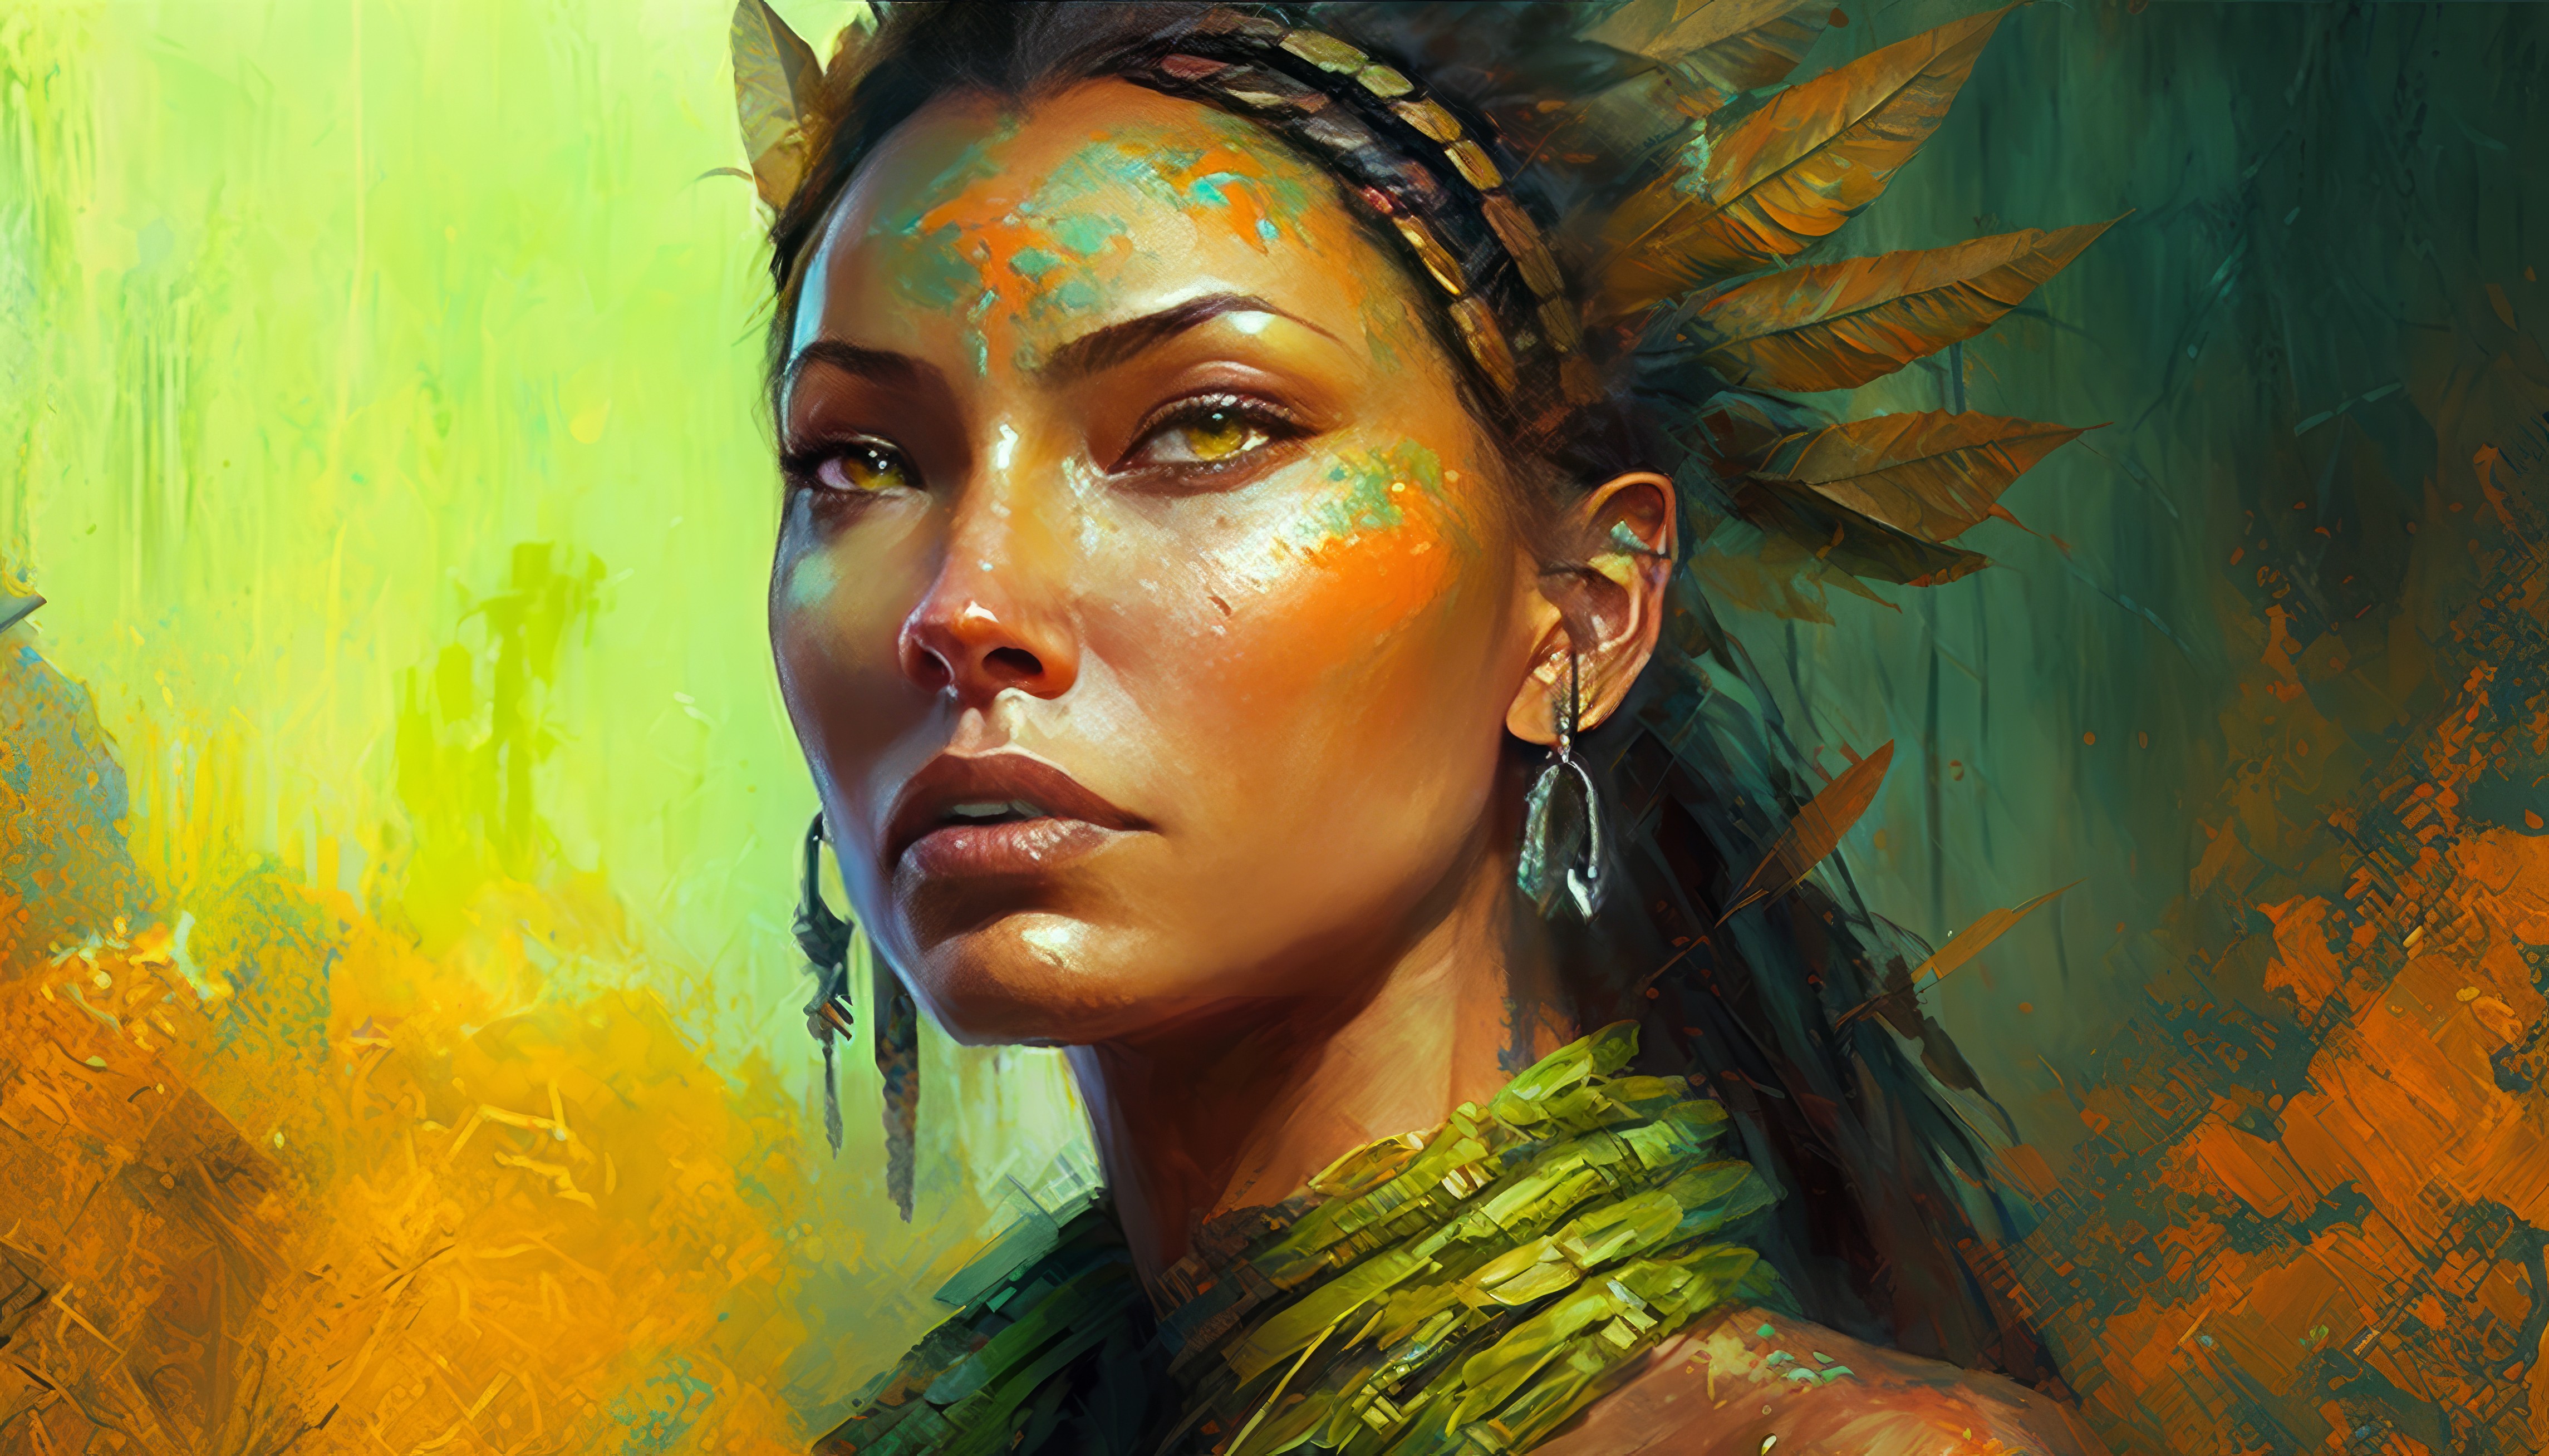 Ai Art Illustration Women Painting Indian Face 4579x2616